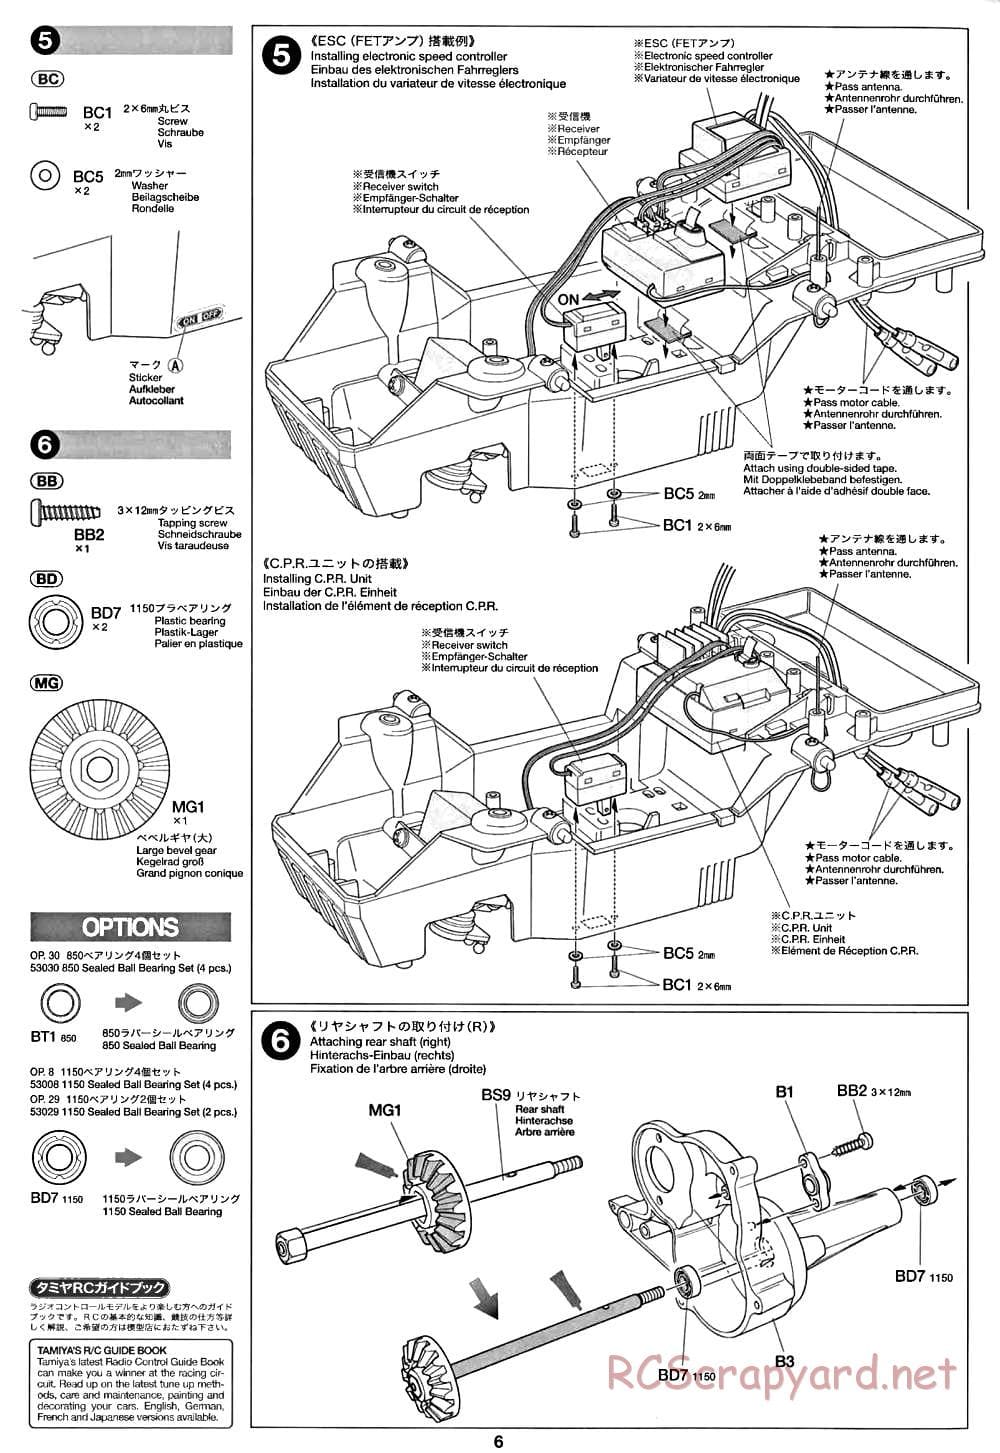 Tamiya - CW-01 Chassis - Manual - Page 6